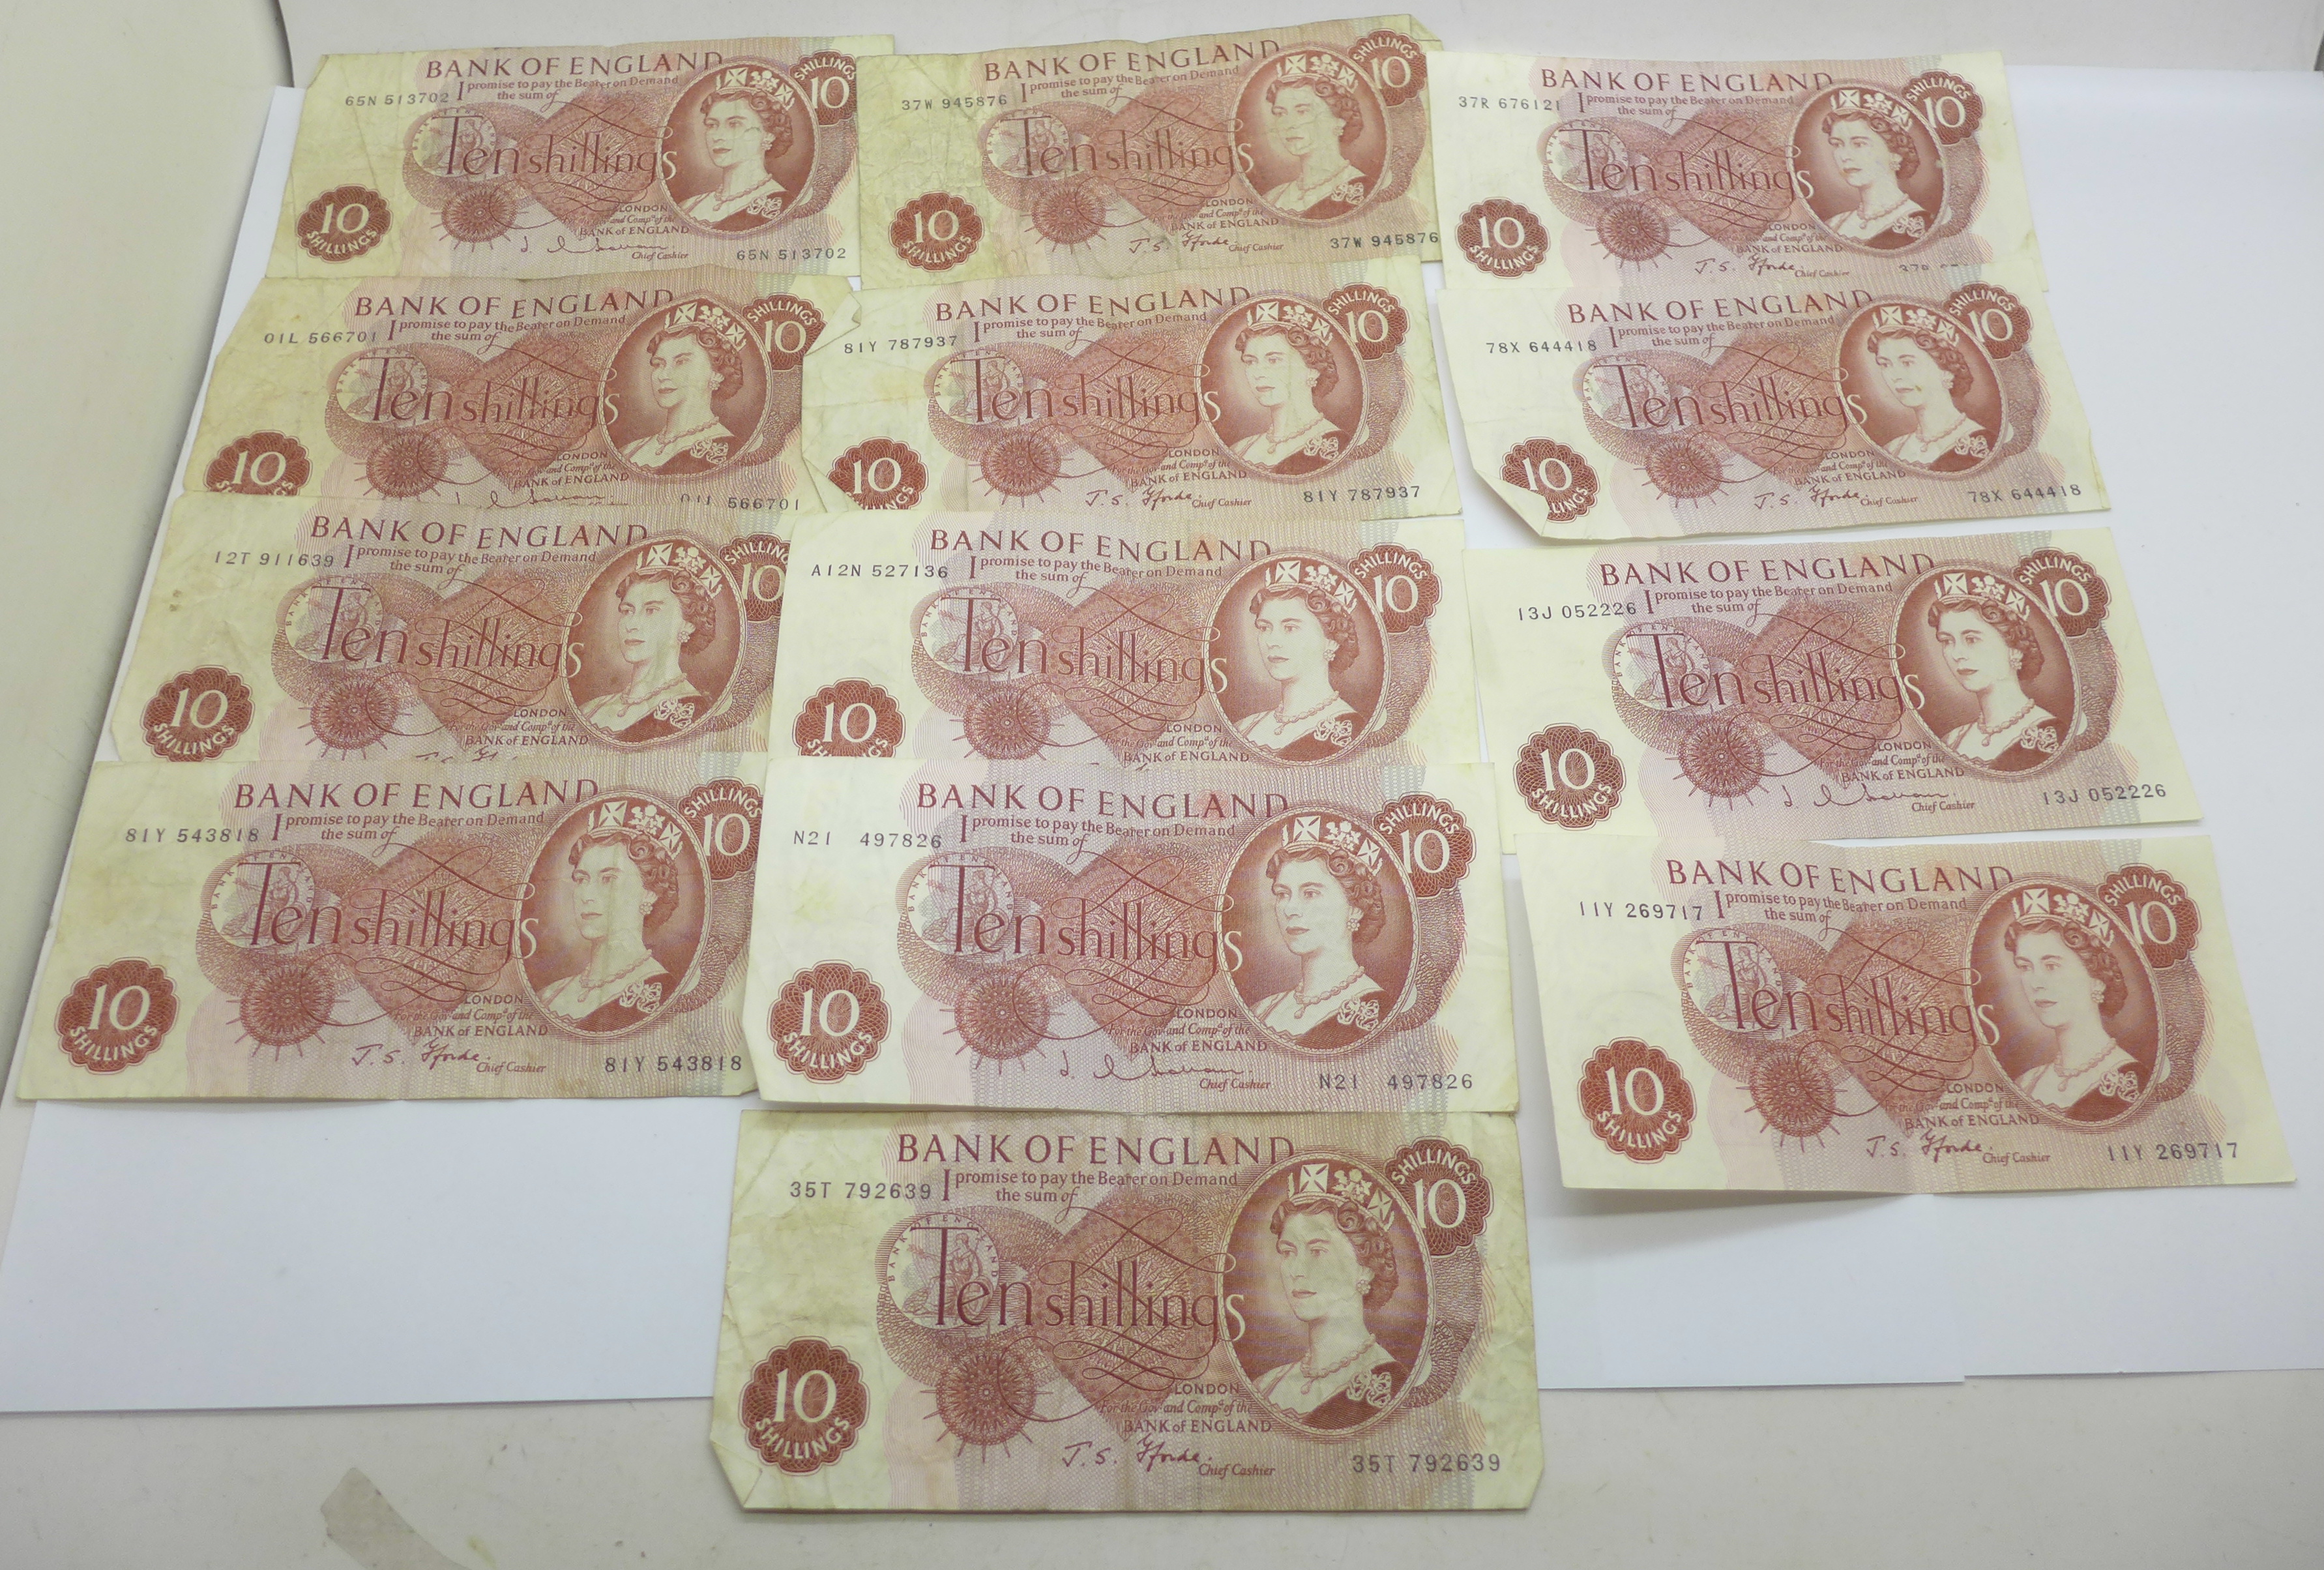 Thirteen ten shillings bank notes